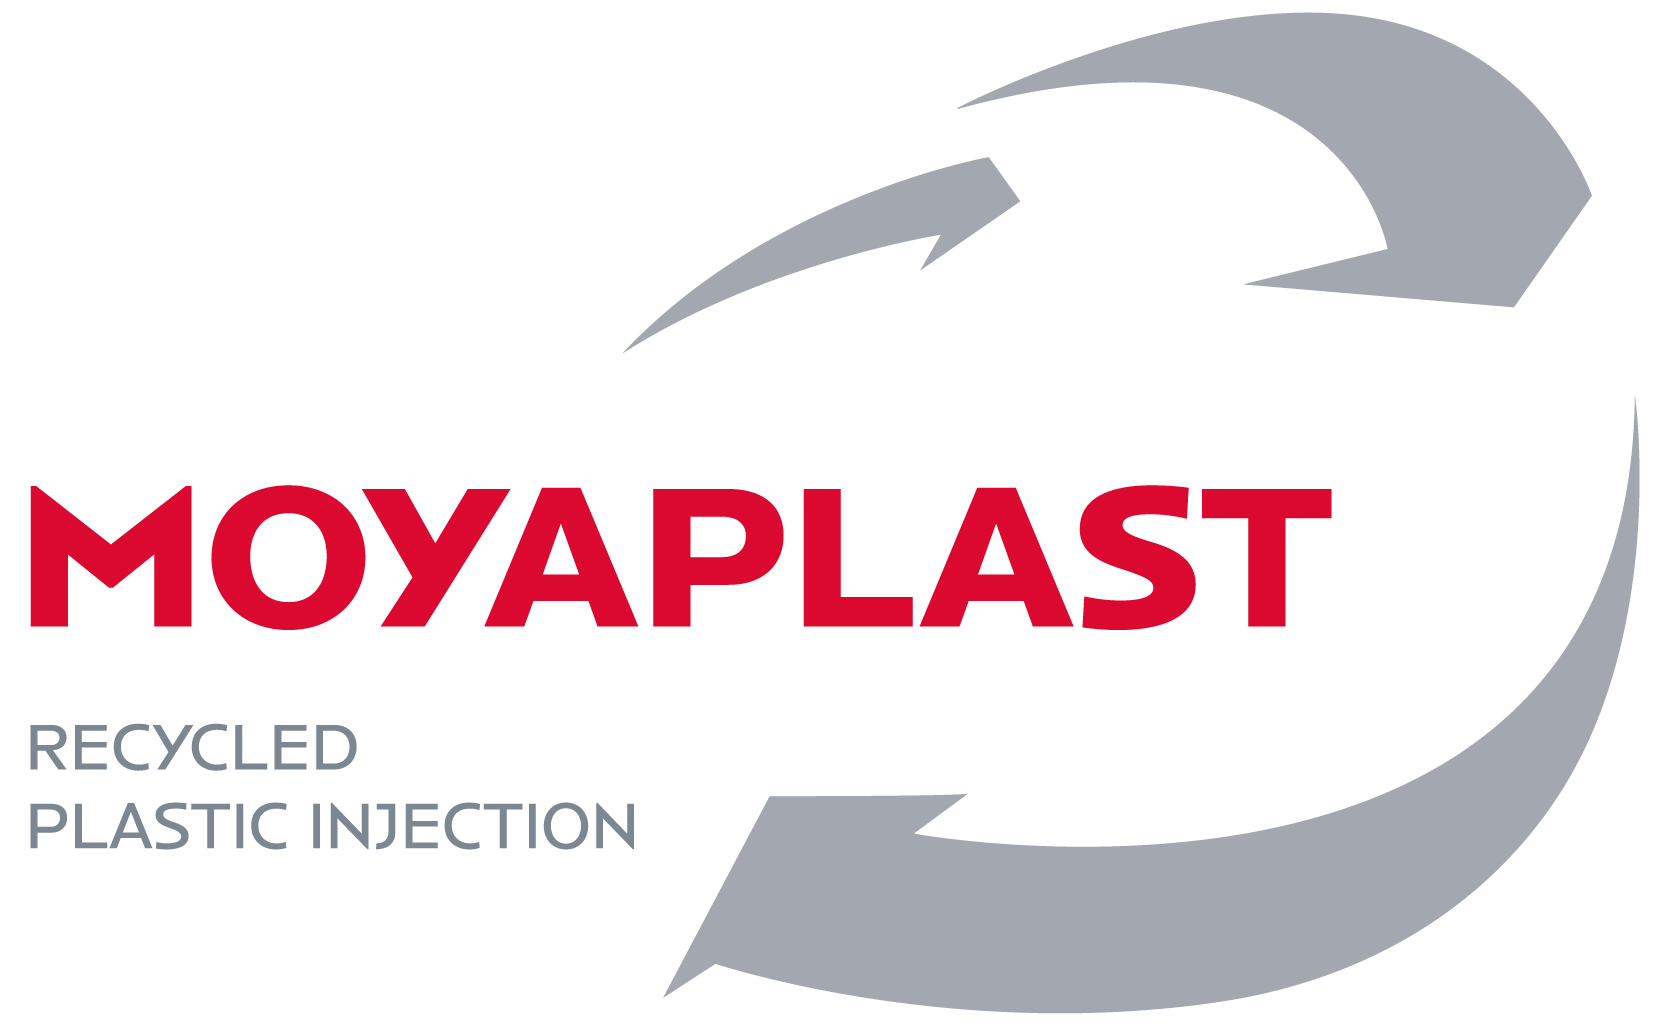 Moyaplast